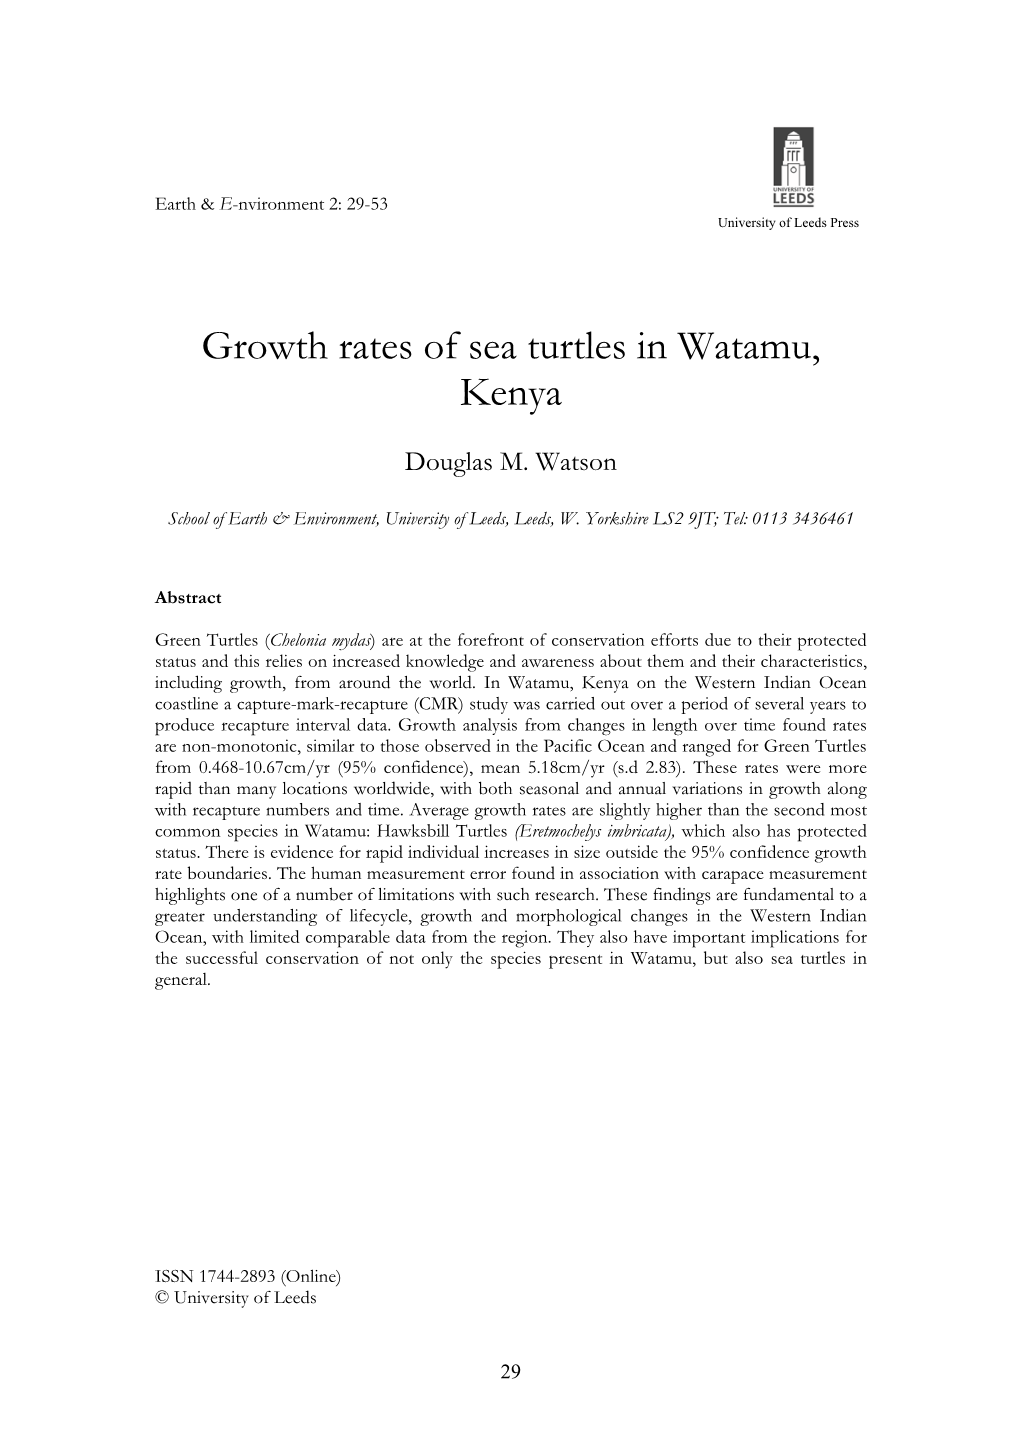 Growth Rates of Sea Turtles in Watamu, Kenya Earth & E-Nvironment 2: 29-53